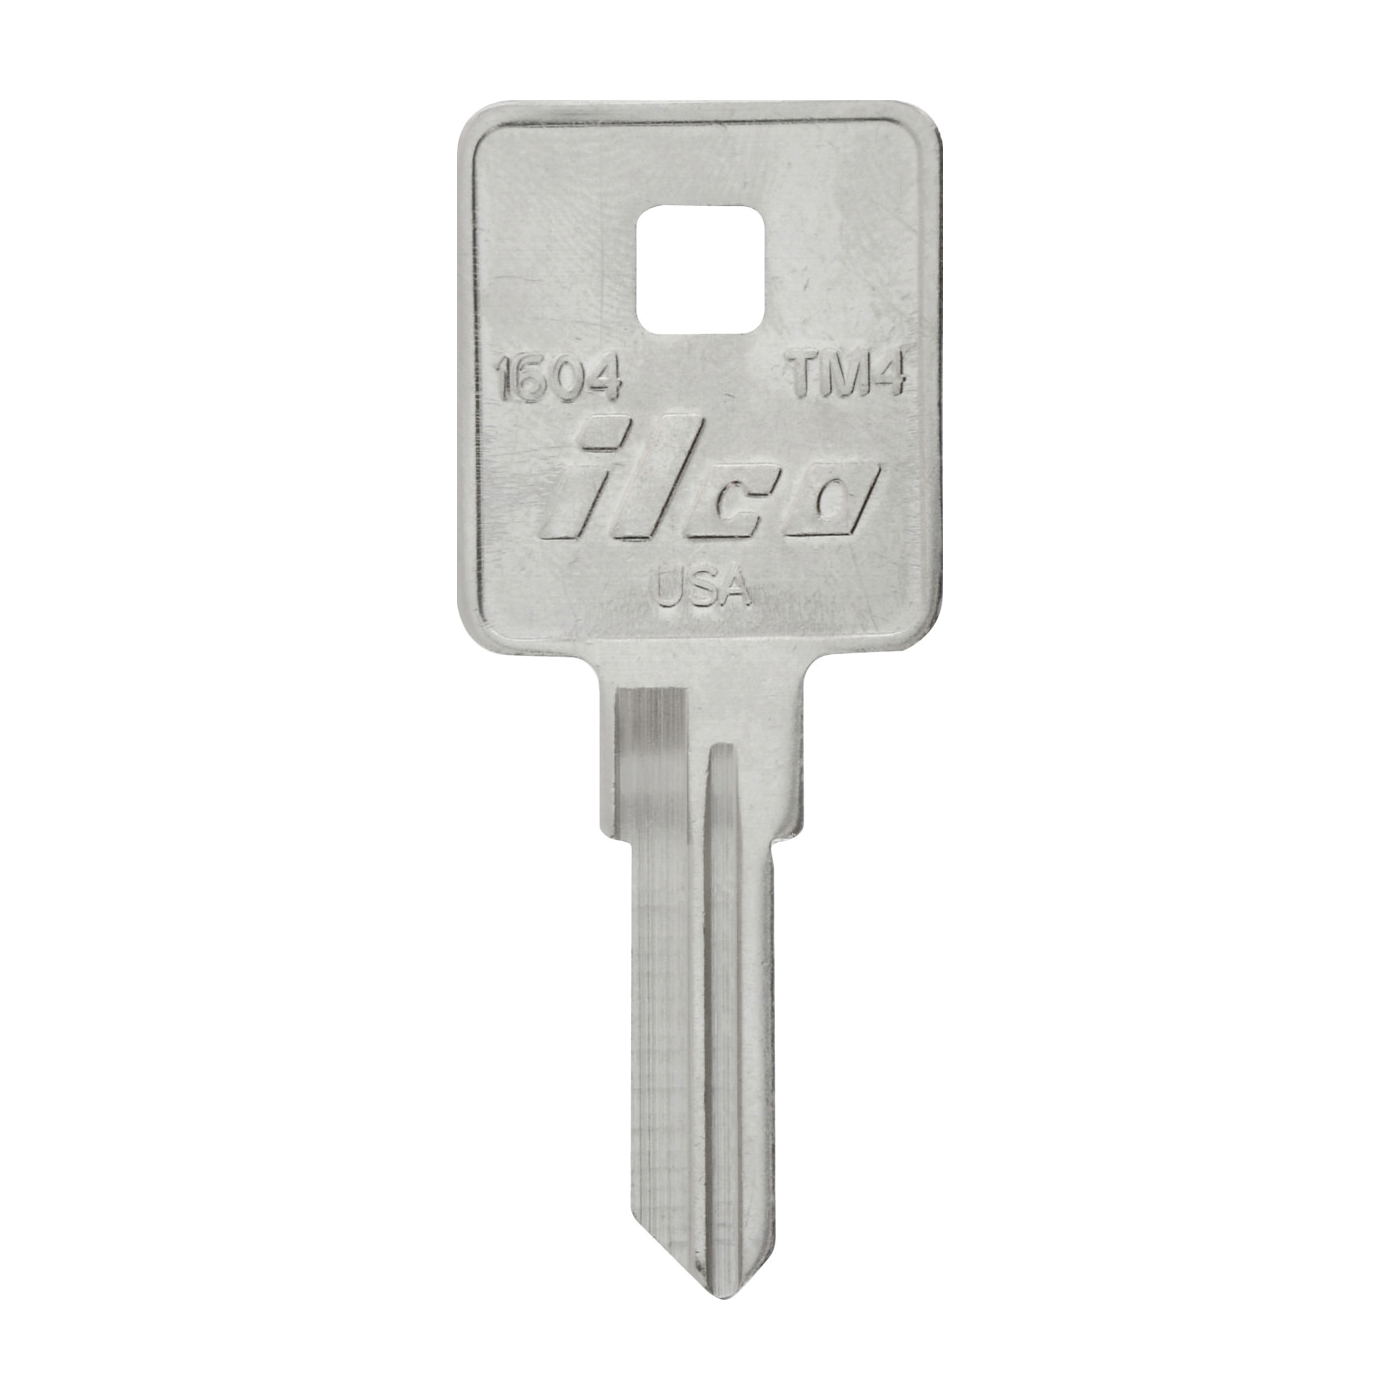 441800 Key, For: Trimark Locks